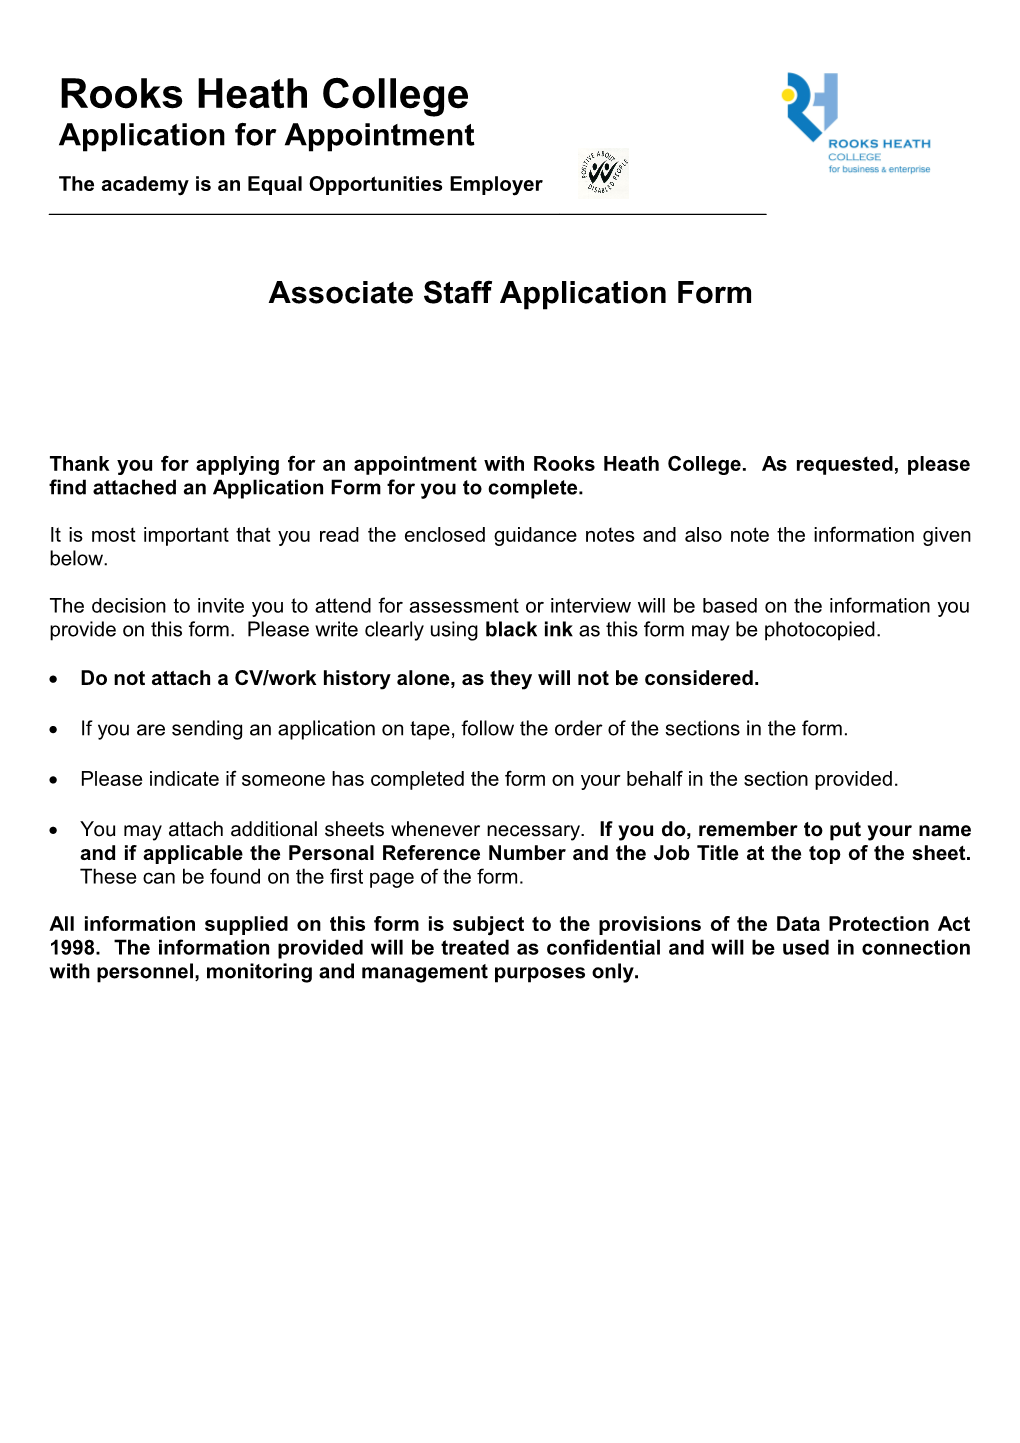 Associate Staff Application Form